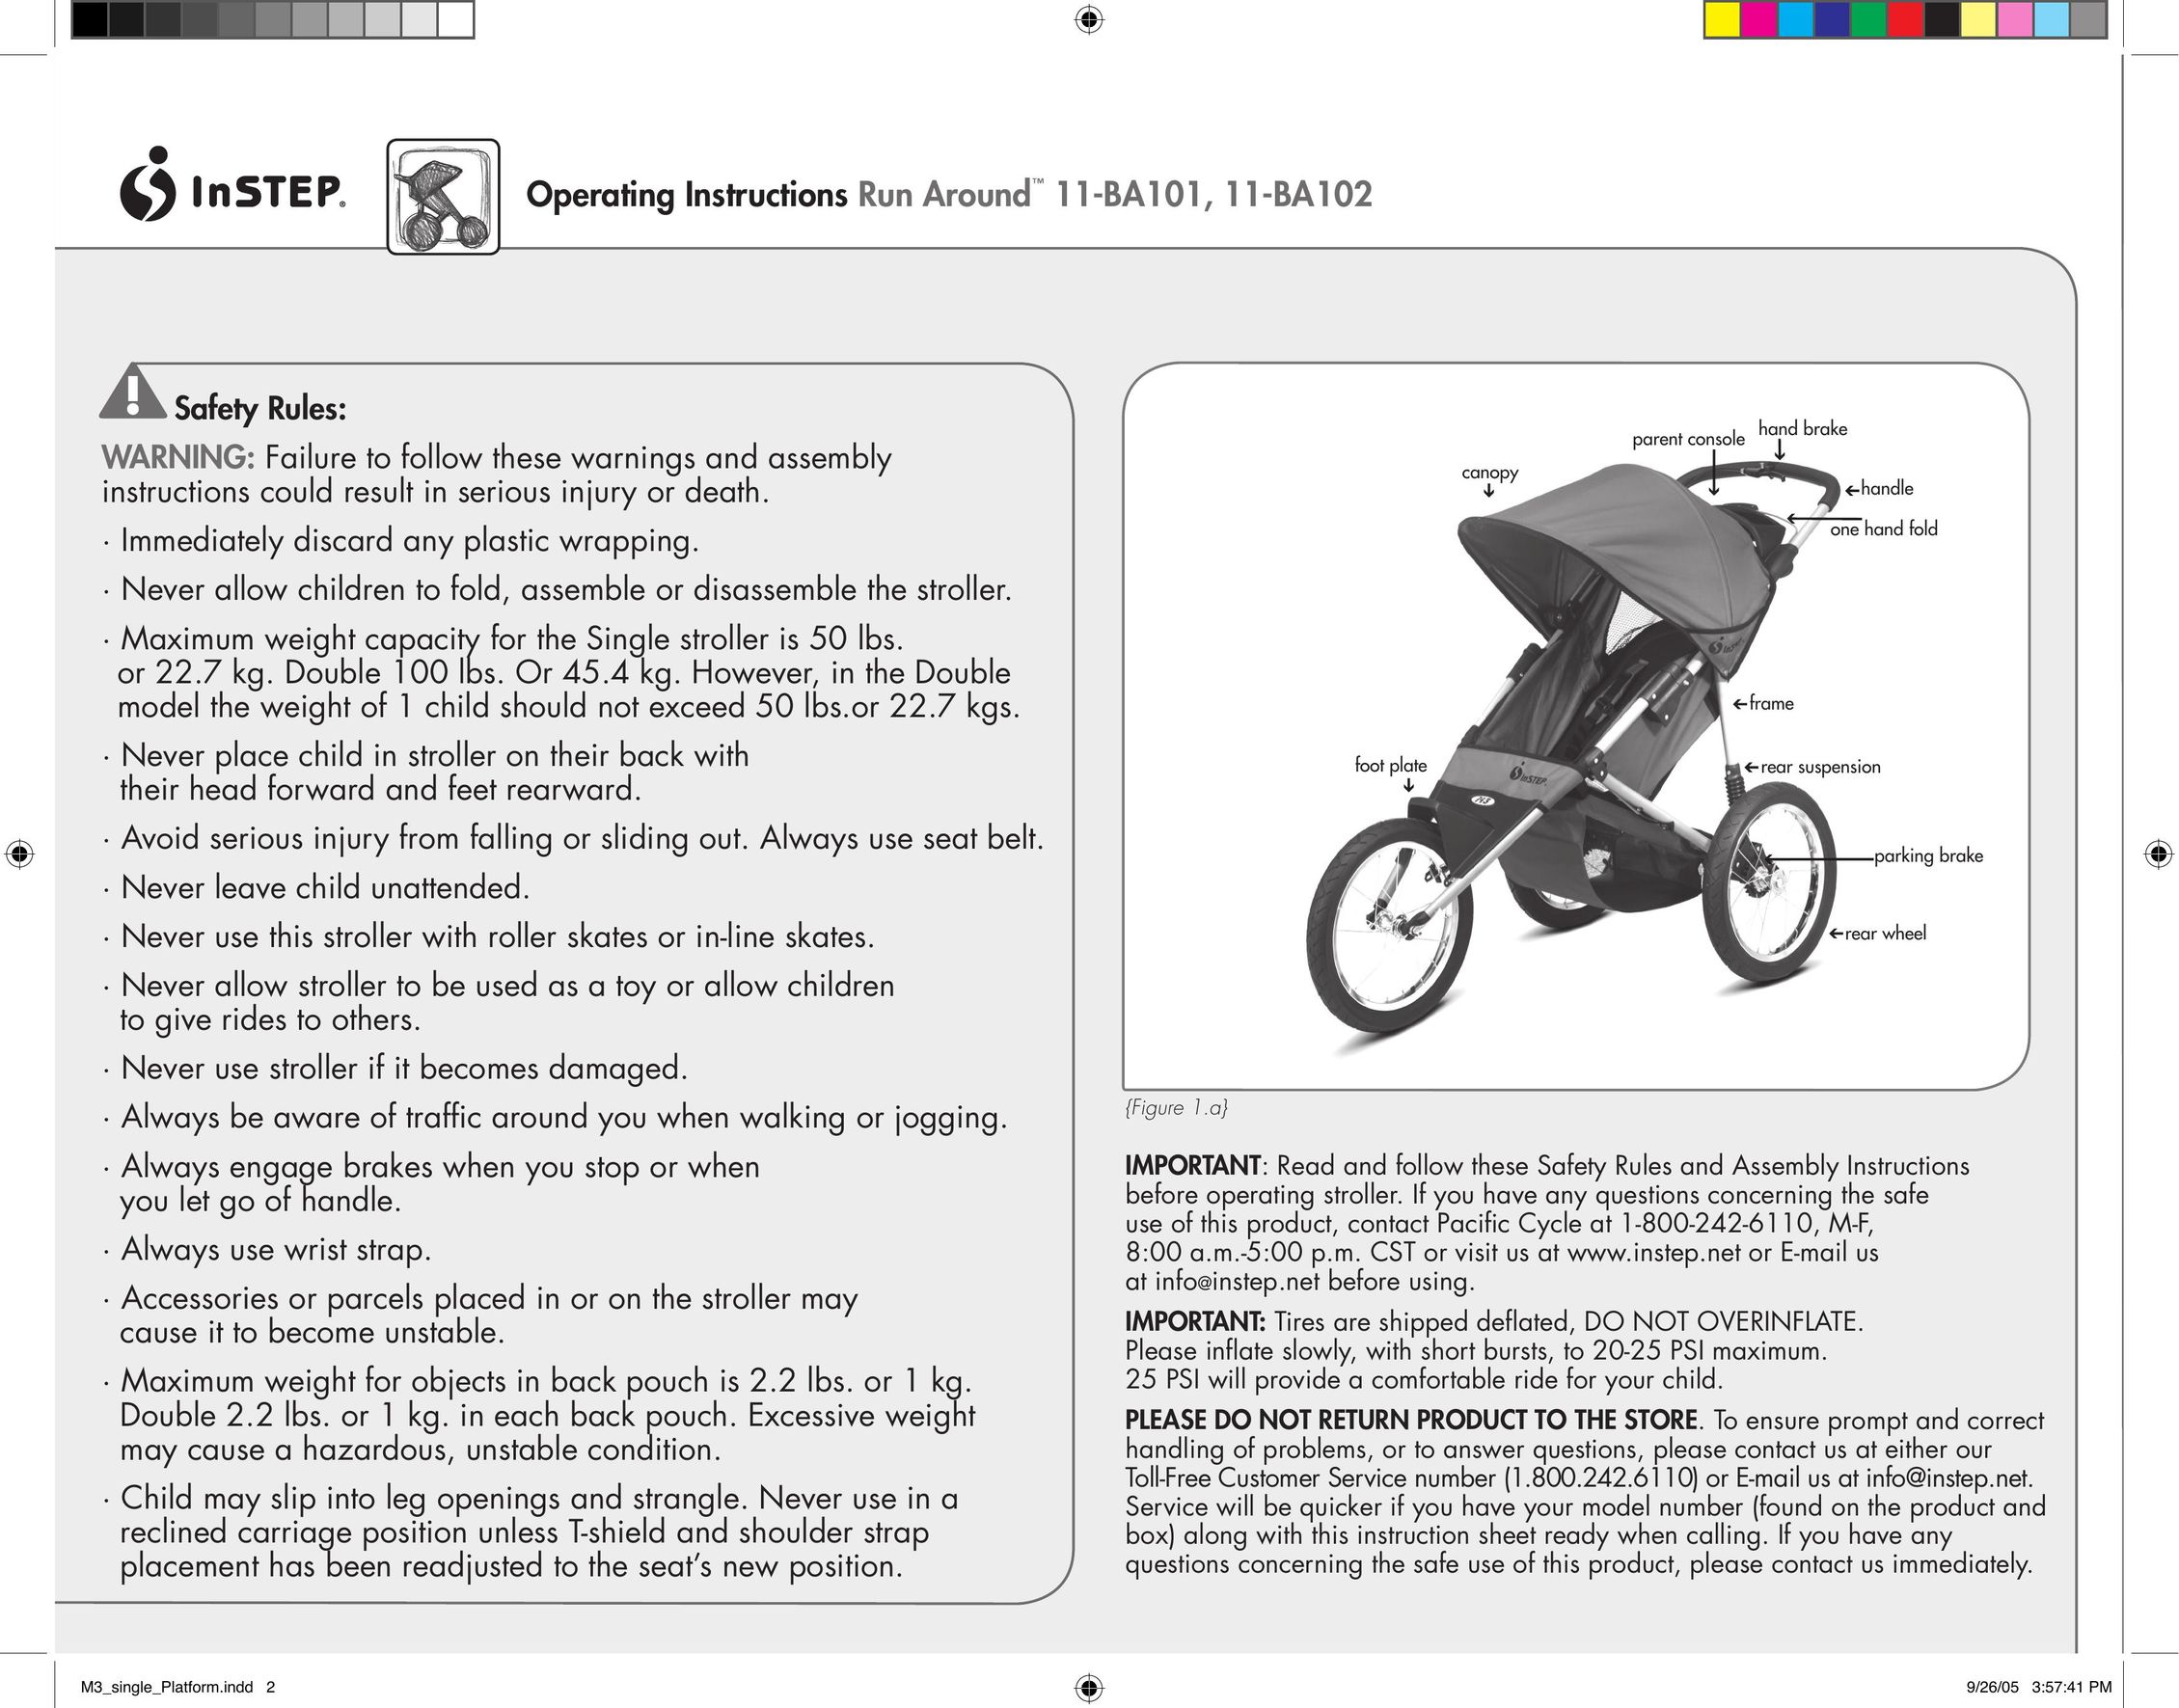 InStep 11-BA101 Stroller User Manual